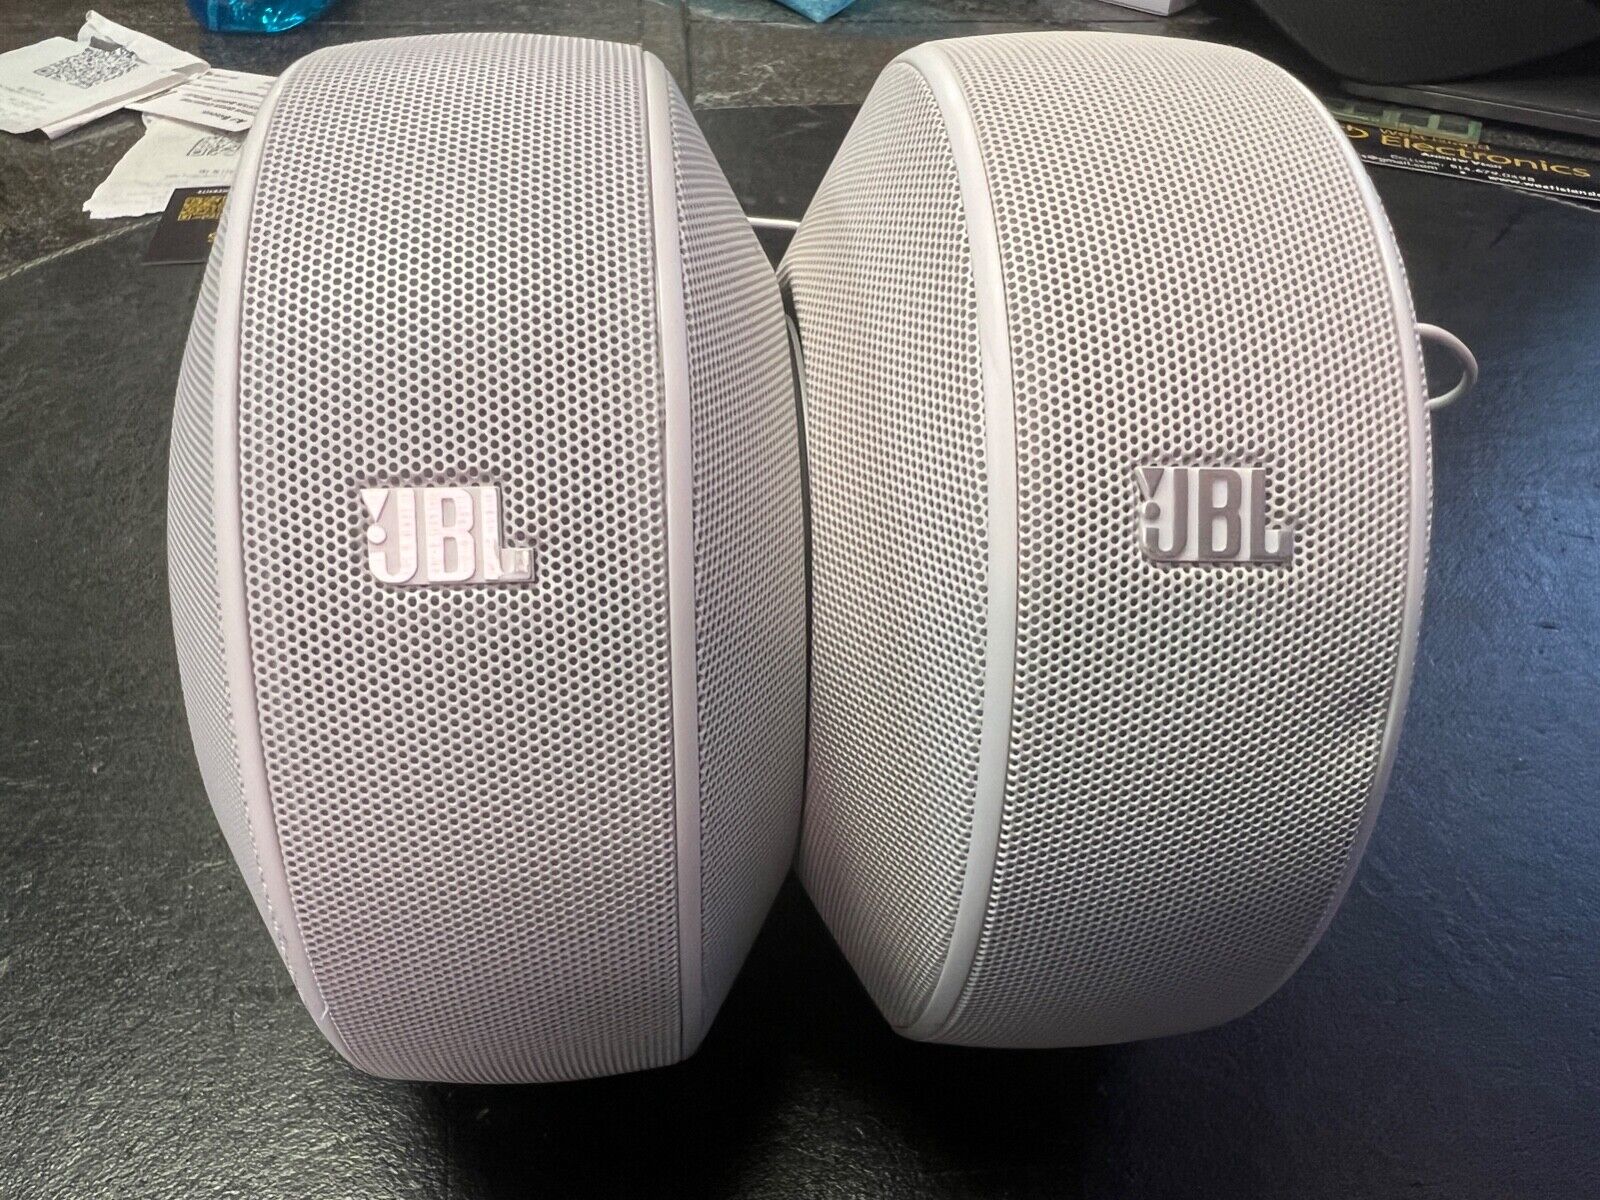 JBL Pebbles Speaker Pair: Plug and Play Stereo Computer Speakers-USB